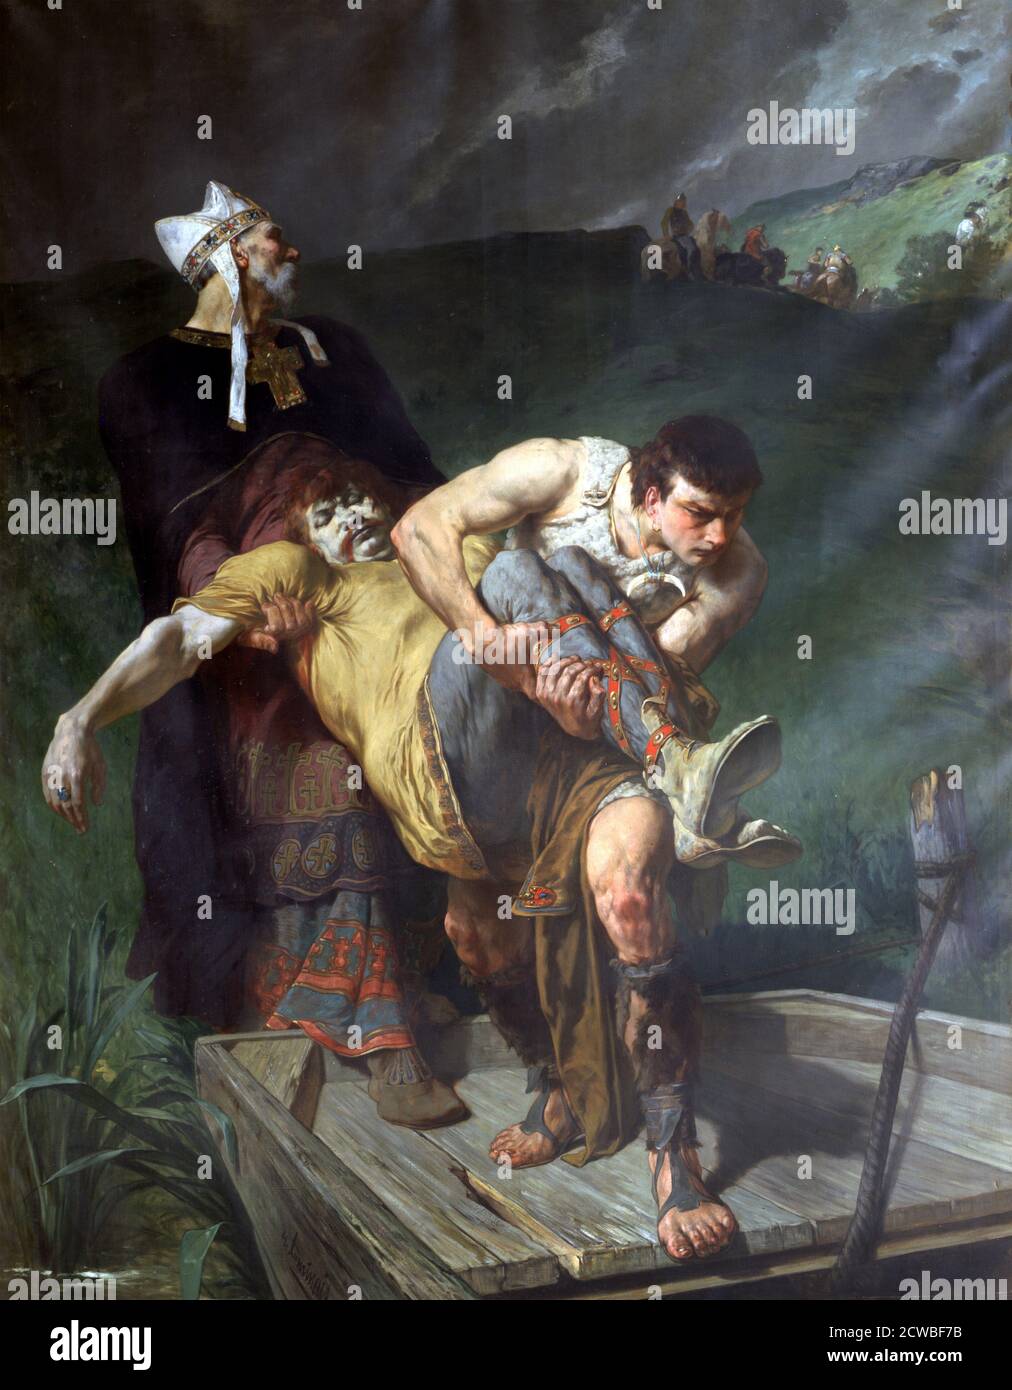 "The Dead", c1842-1896. Artista: Evariste Vital Luminais. Evariste Vital Luminais (1821-1896) è stato un pittore francese. Foto Stock